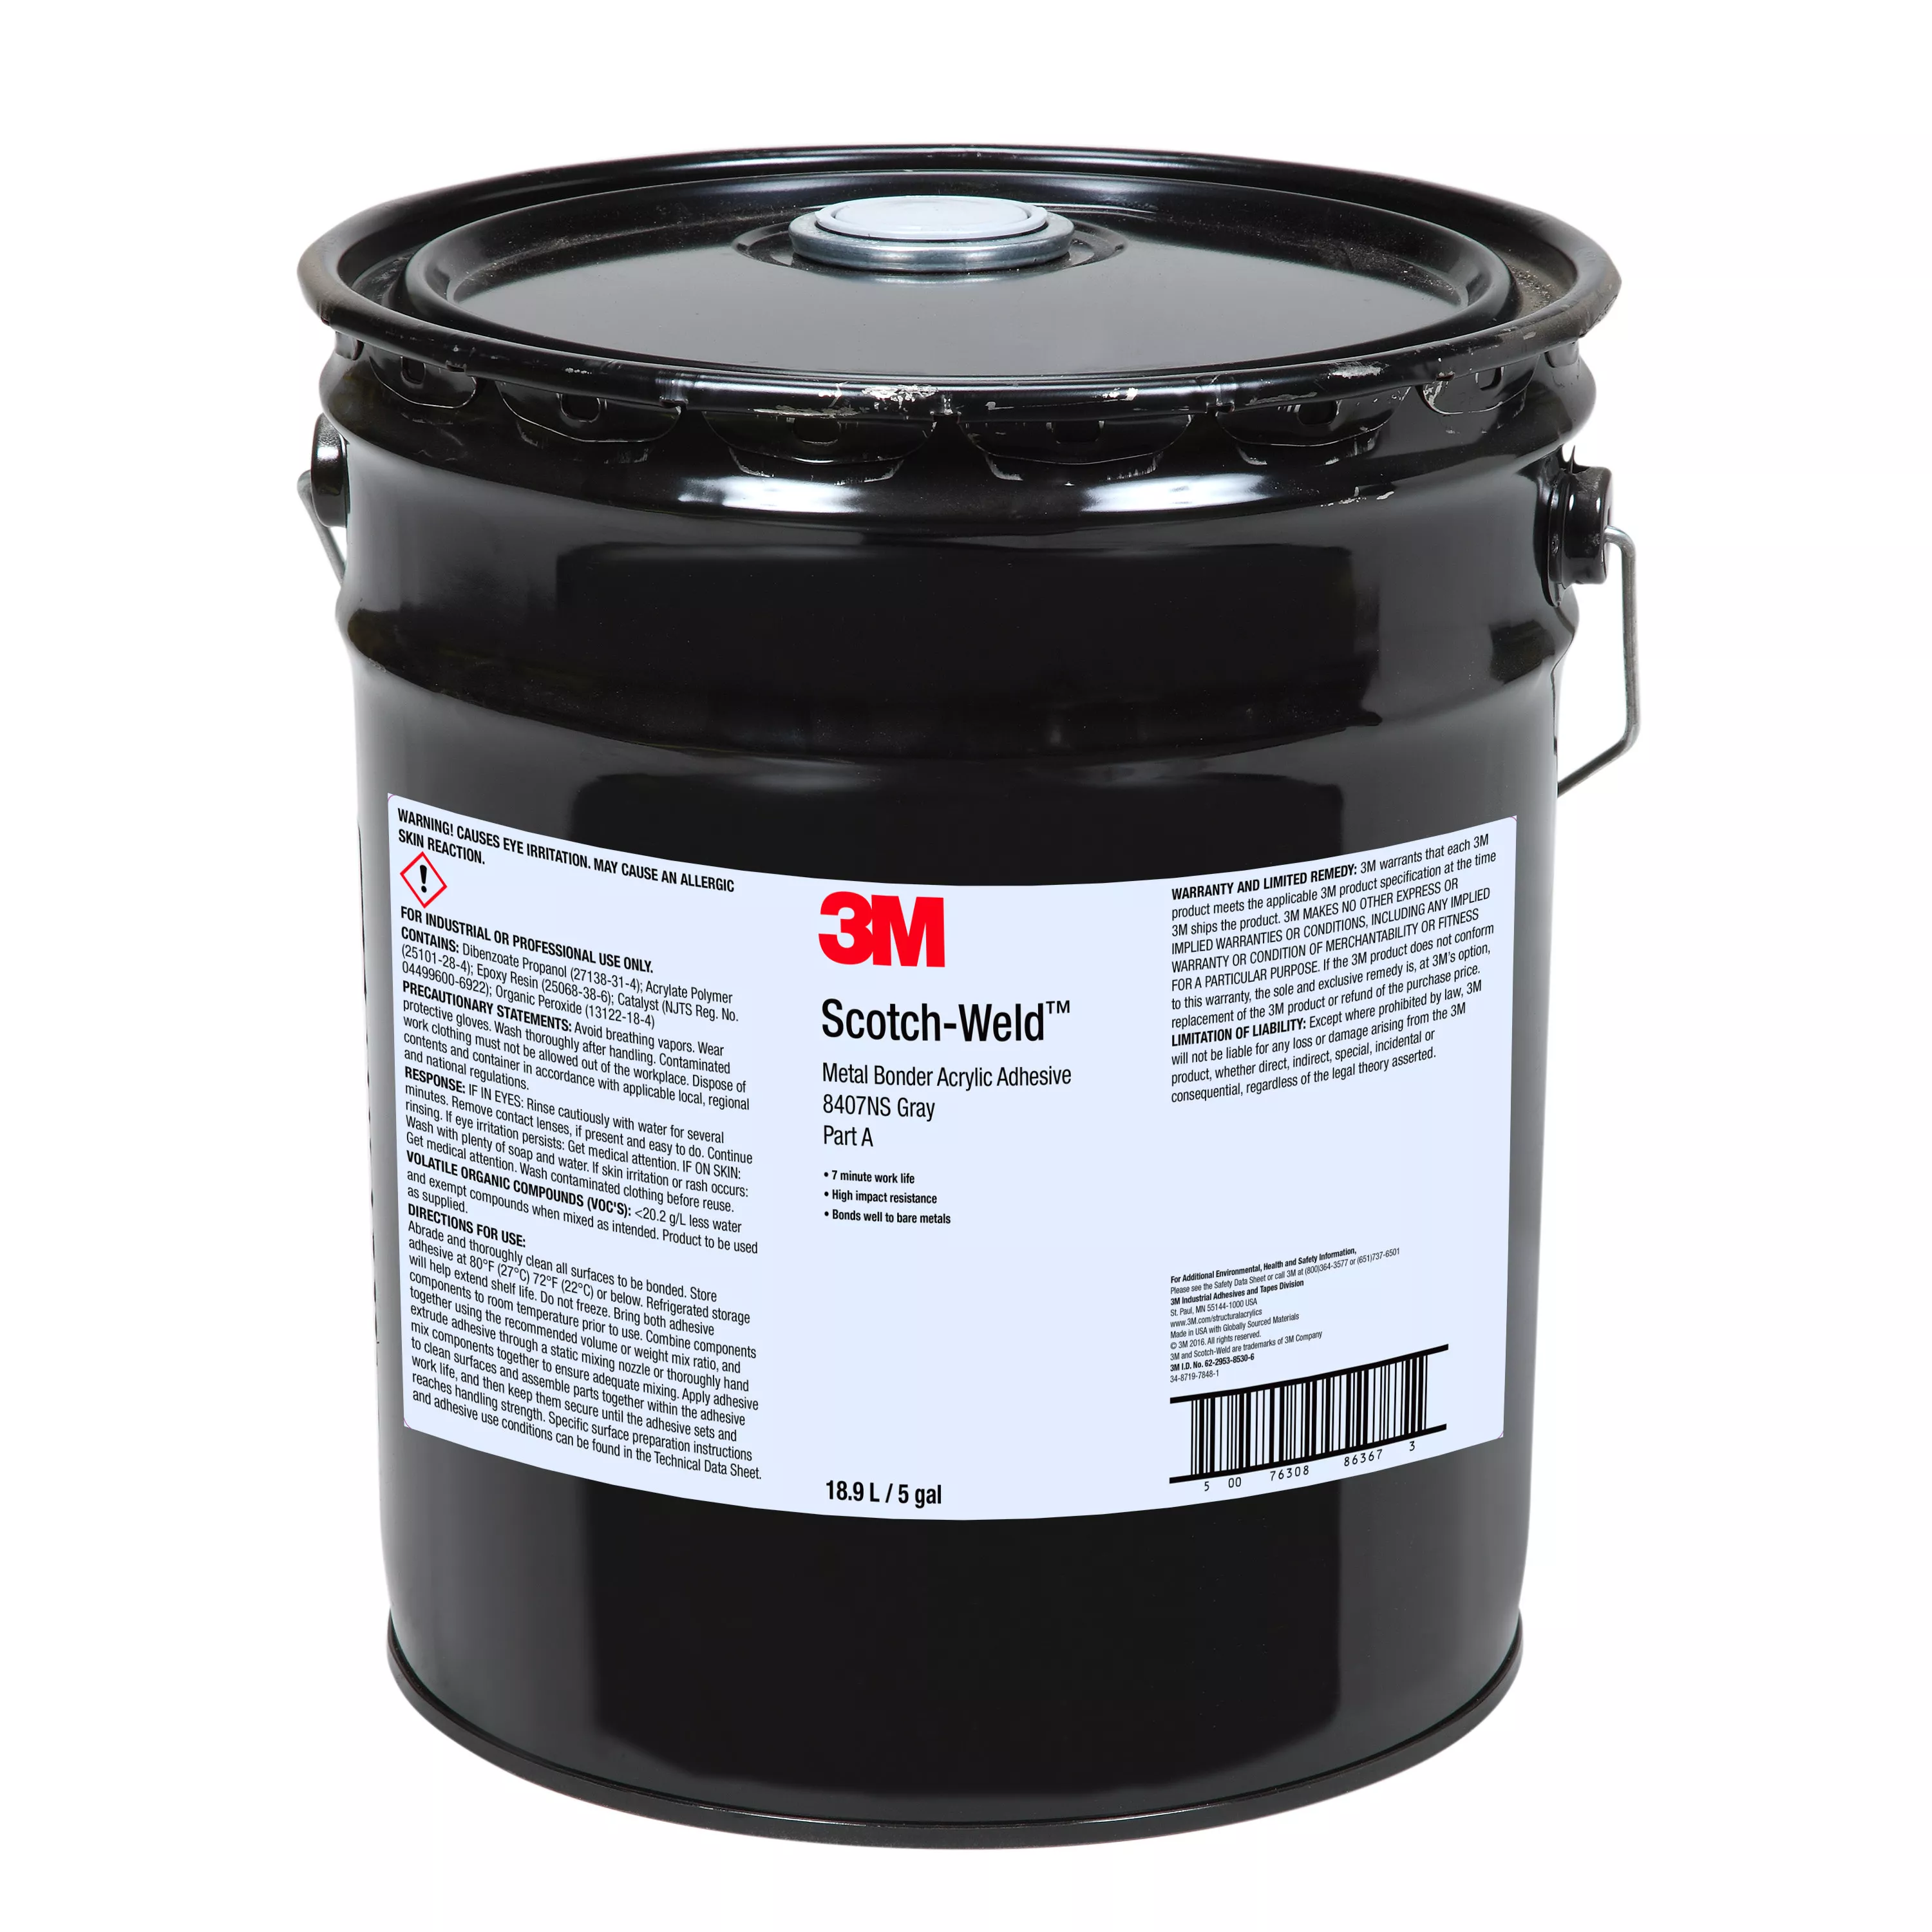 3M™ Scotch-Weld™ Metal Bonder Acrylic Adhesive 8407NS, Bead Free, Gray, Part A, 5 Gallon (Pail), Drum